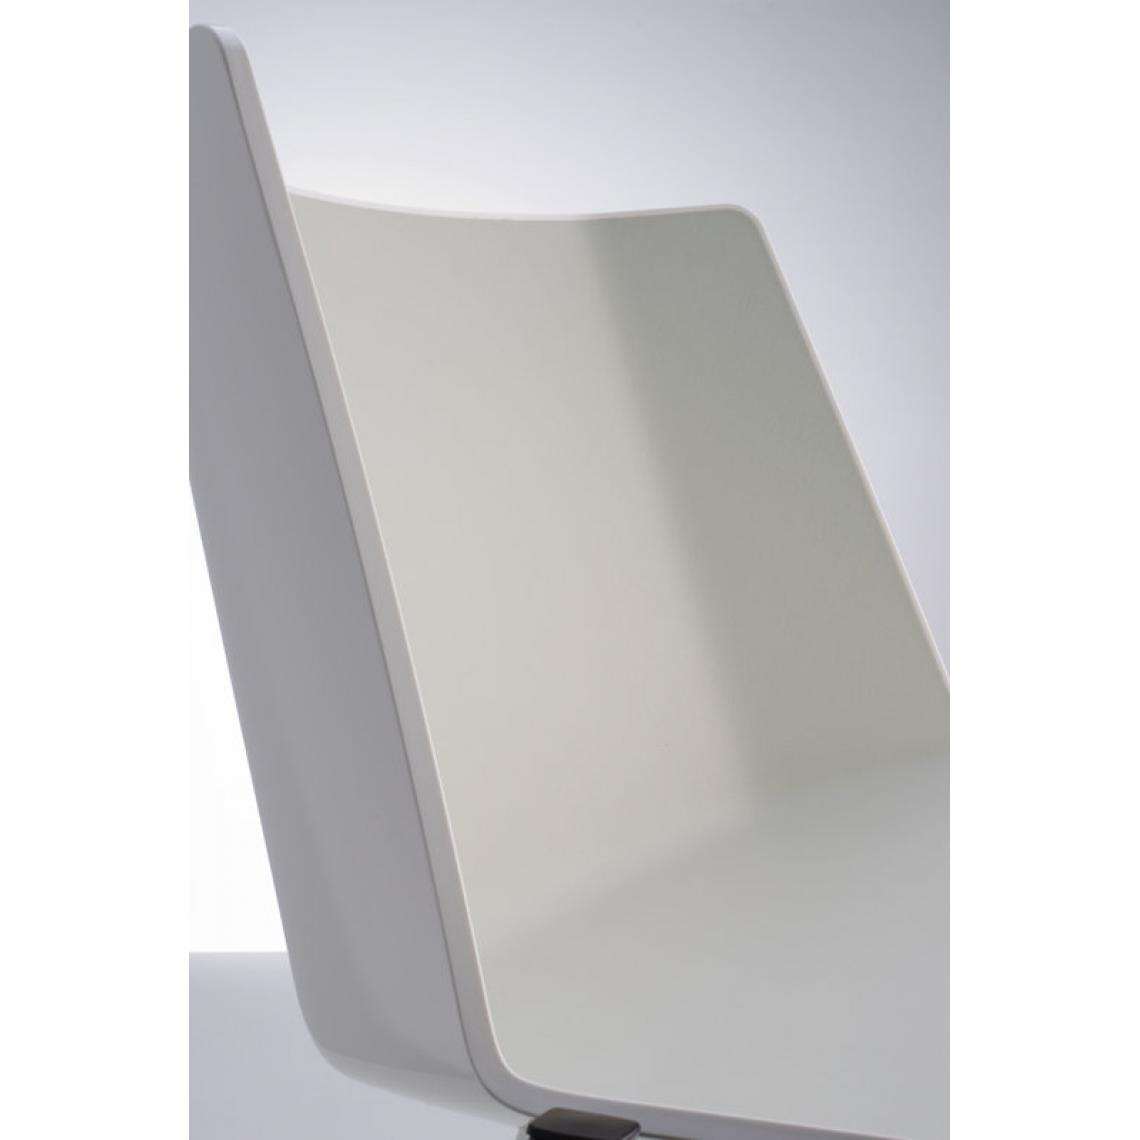 Mdf Italia - Chaise AÏKU - blanc brillant/gris clair - Chêne blanchi - 4 pieds en chêne - Chaises